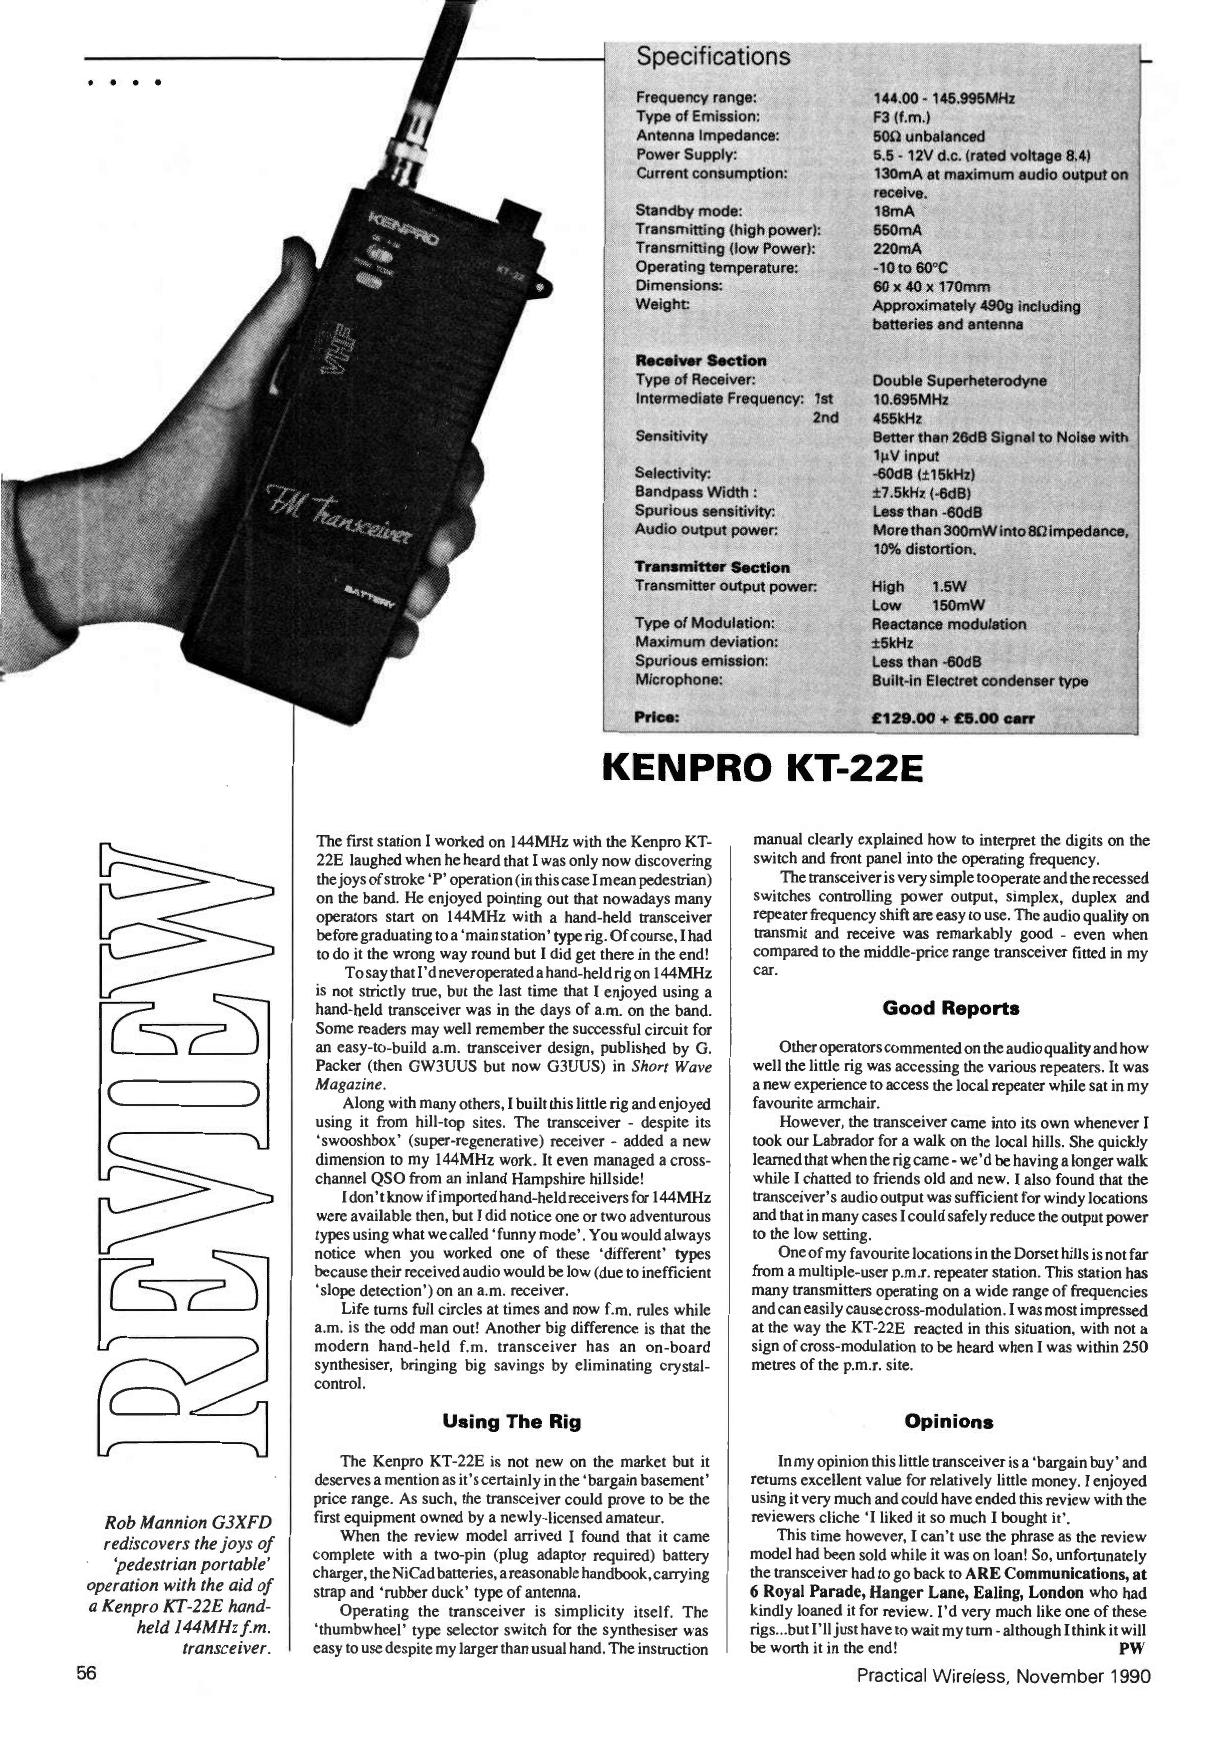 Kenpro KT-22 Review in Practical Wireless